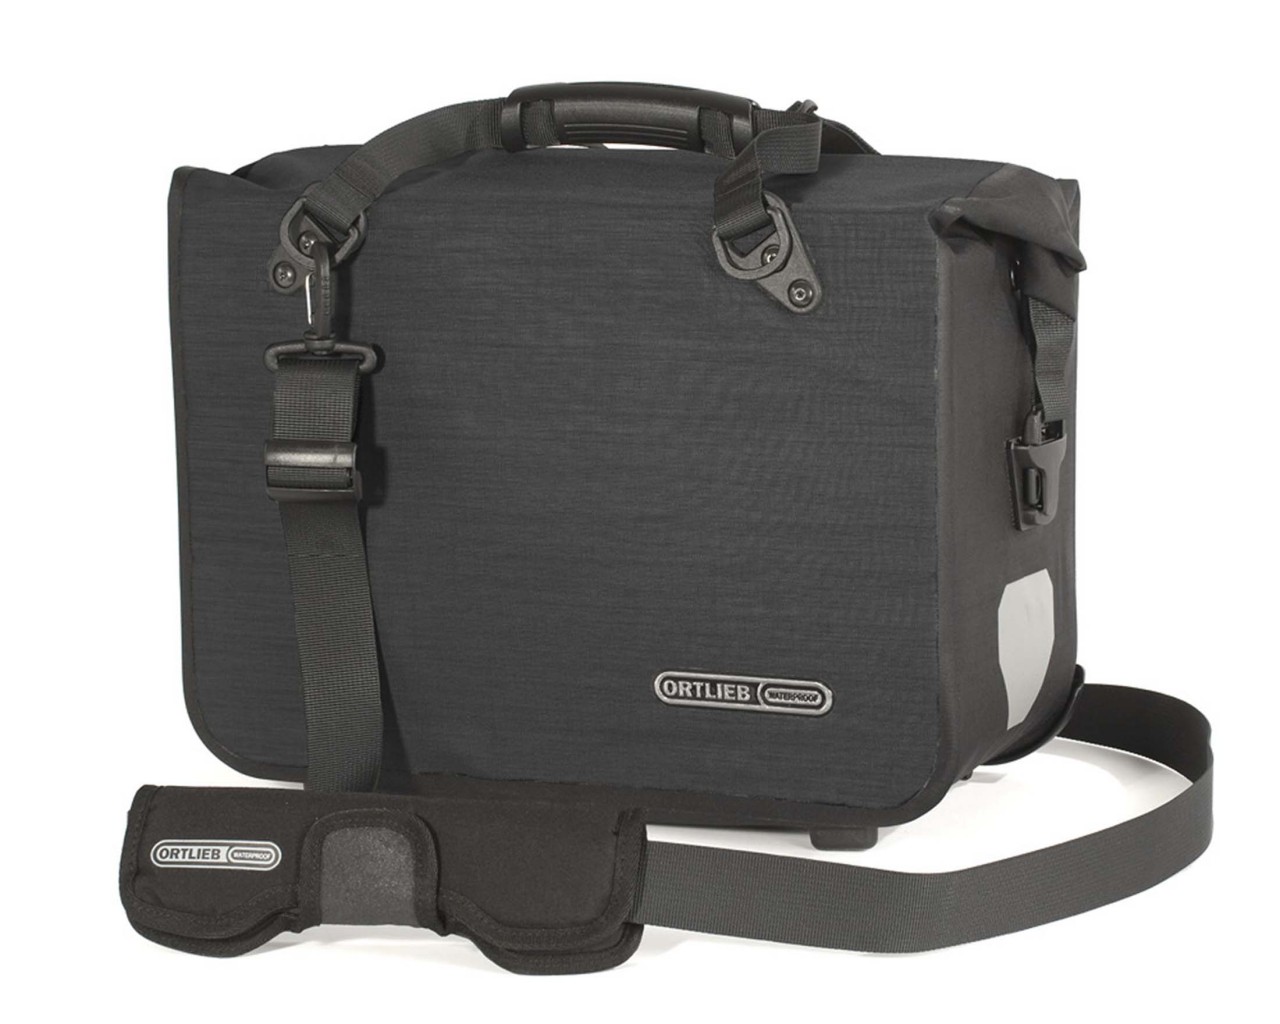 Ortlieb Office-Bag QL2.1 waterproof business bag (single bag) PVC-free - size M | black